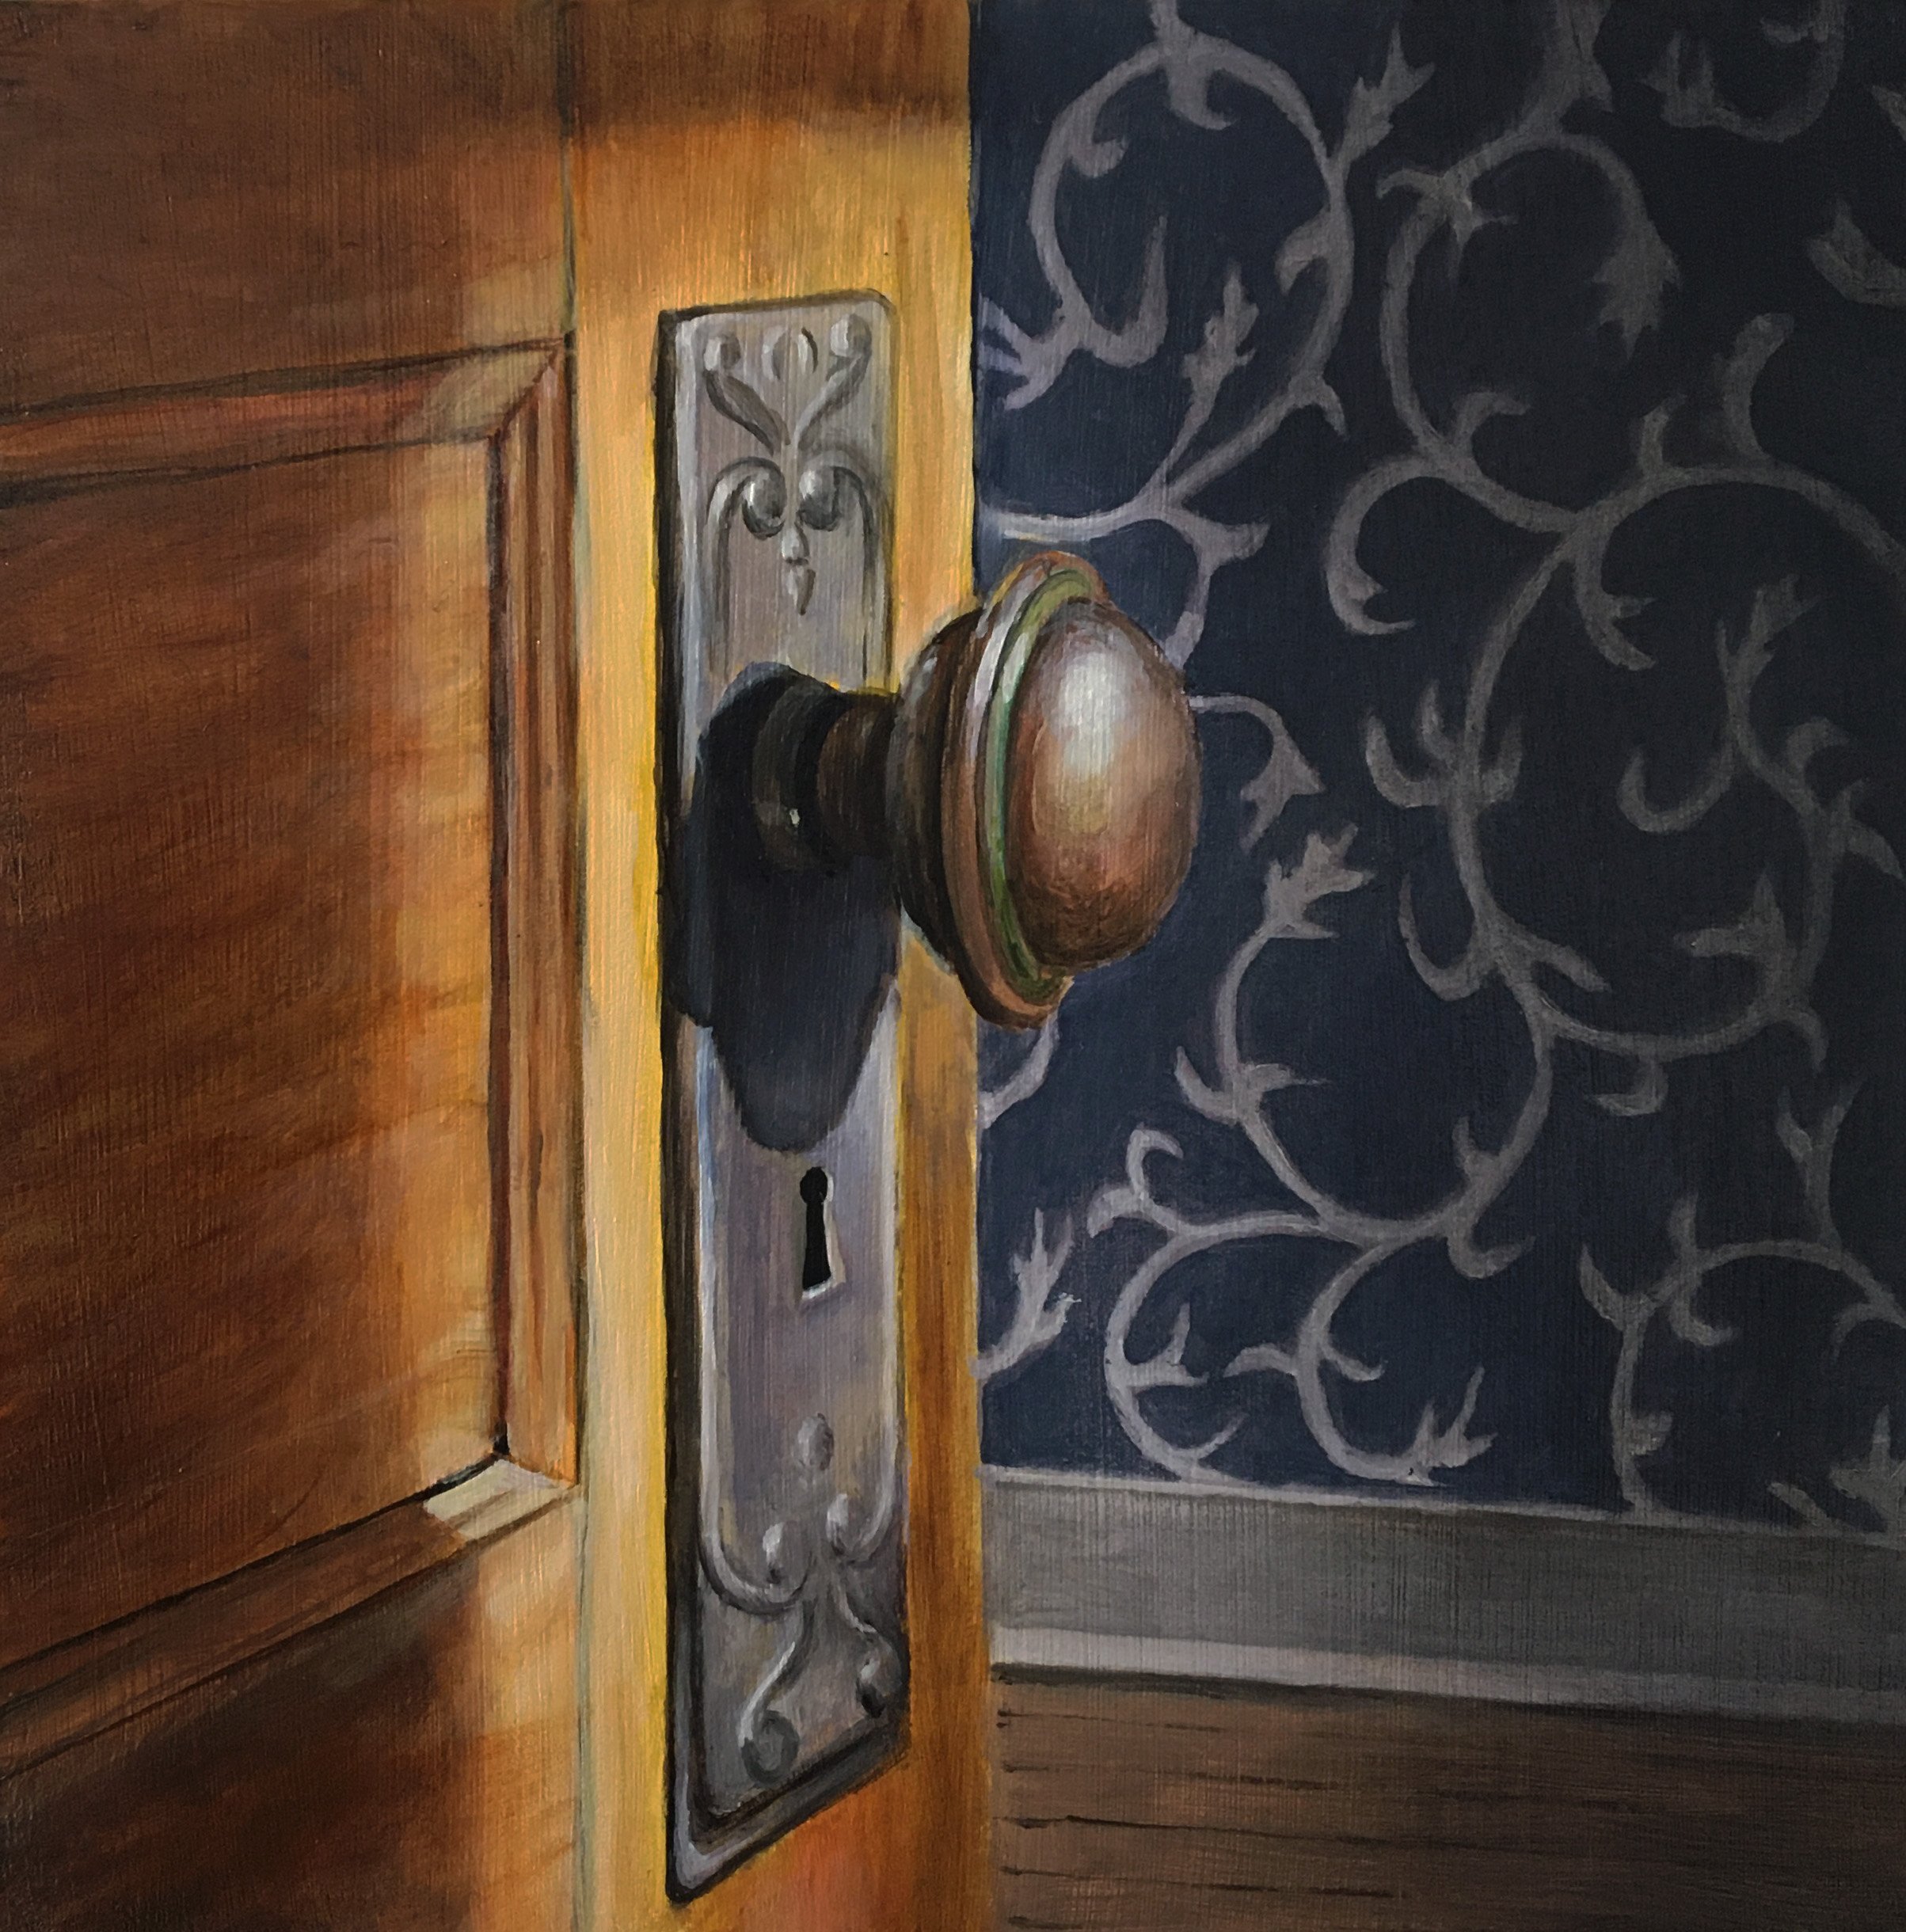   Doorknob in Sunlight   2020  Oil on panel  6 x 6 inches   